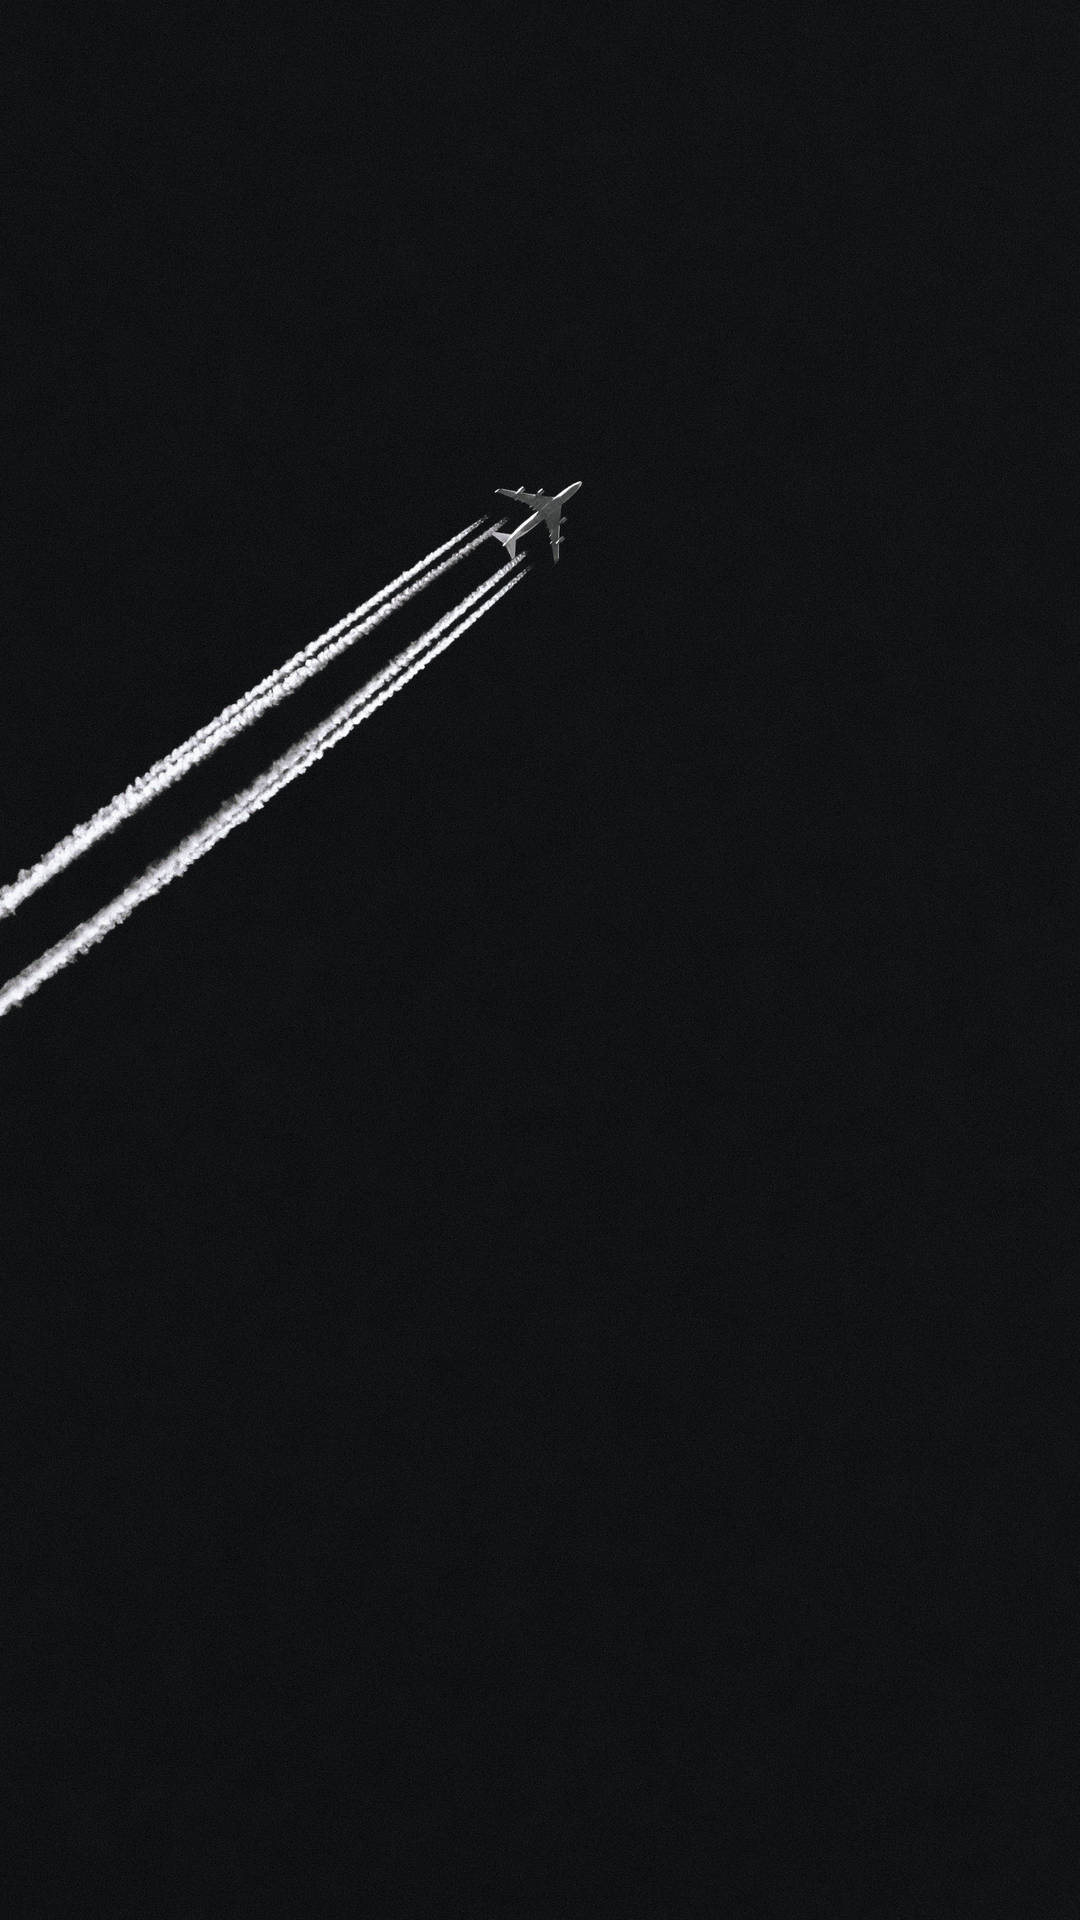 Minimalist Airplane 4k Ultra Hd Dark Phone Background